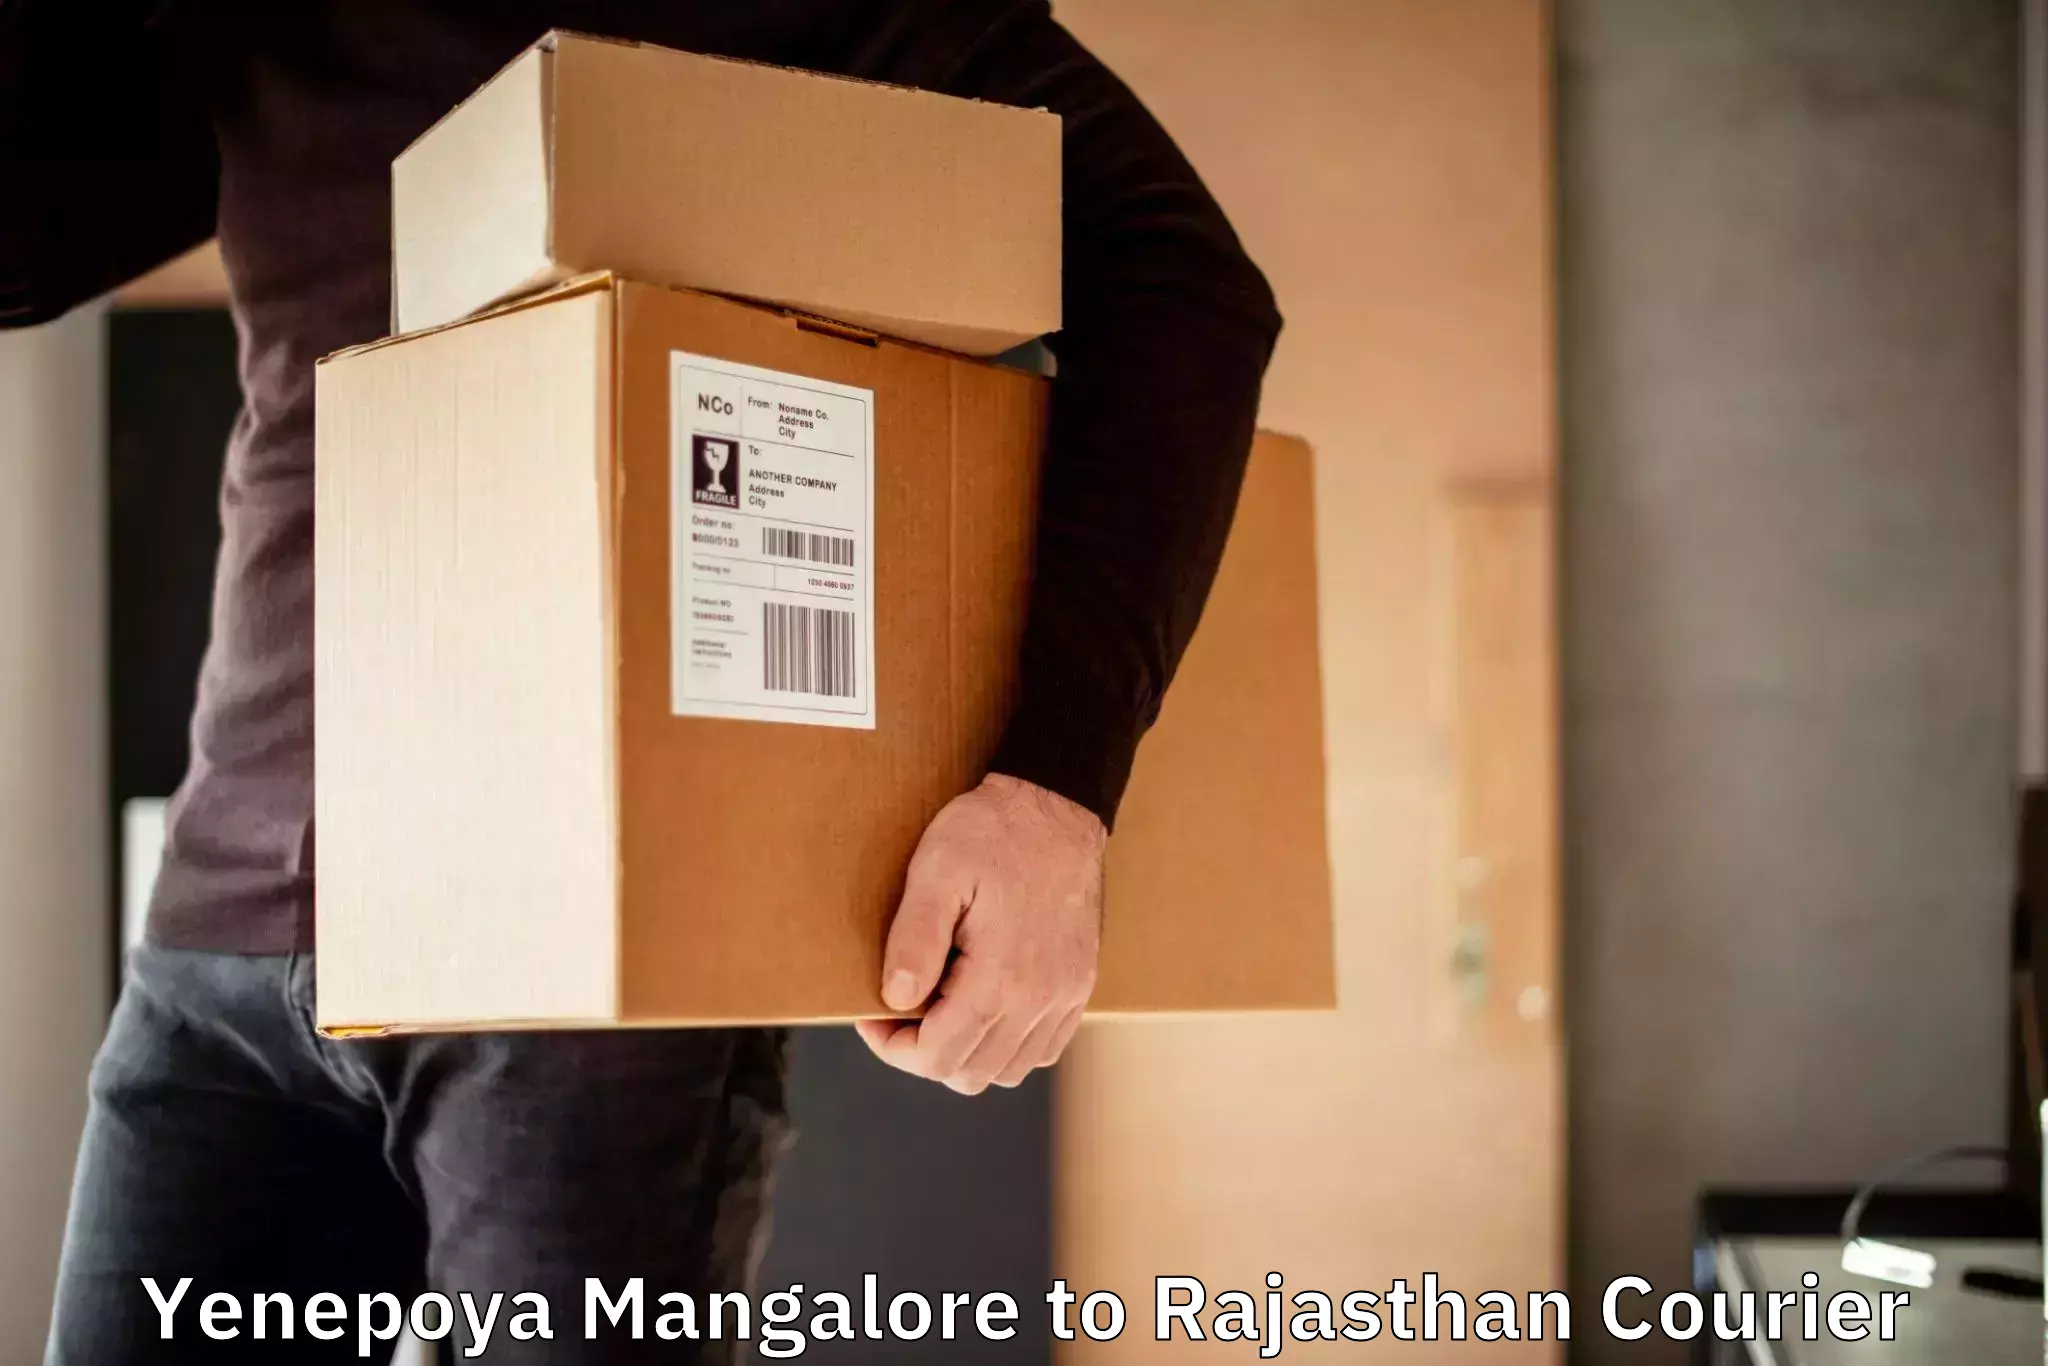 Global courier networks Yenepoya Mangalore to Rajsamand